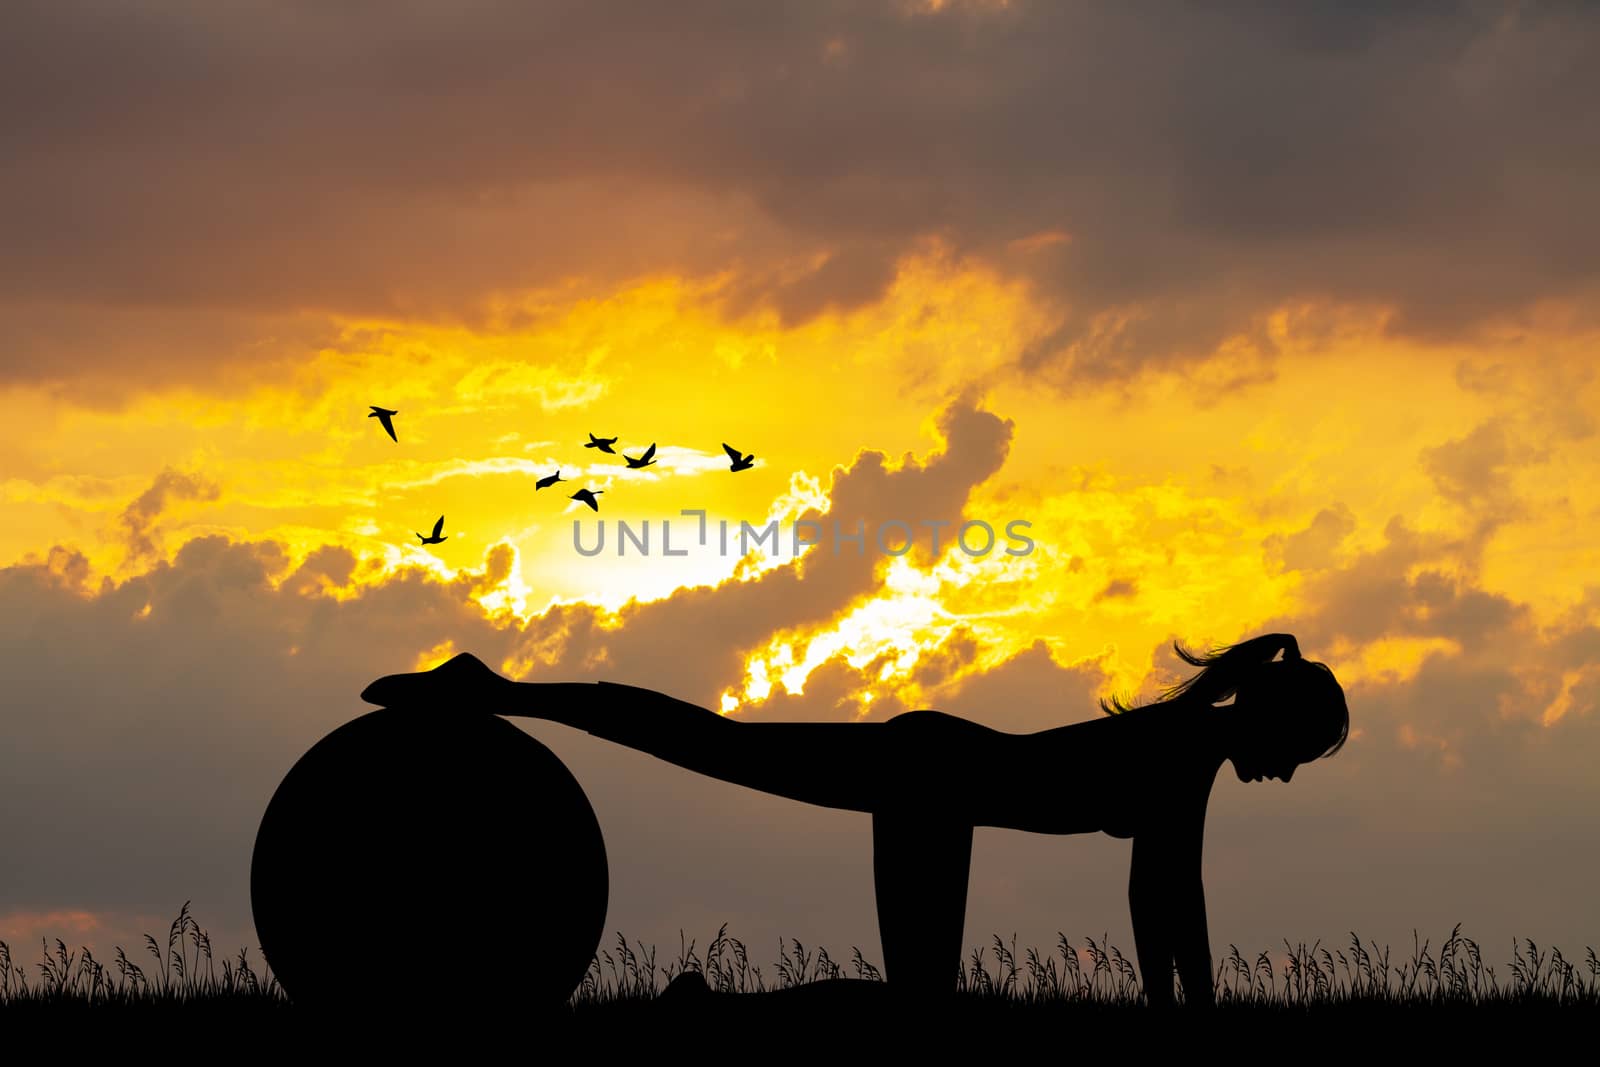 illustration of pilates silhouette at sunset